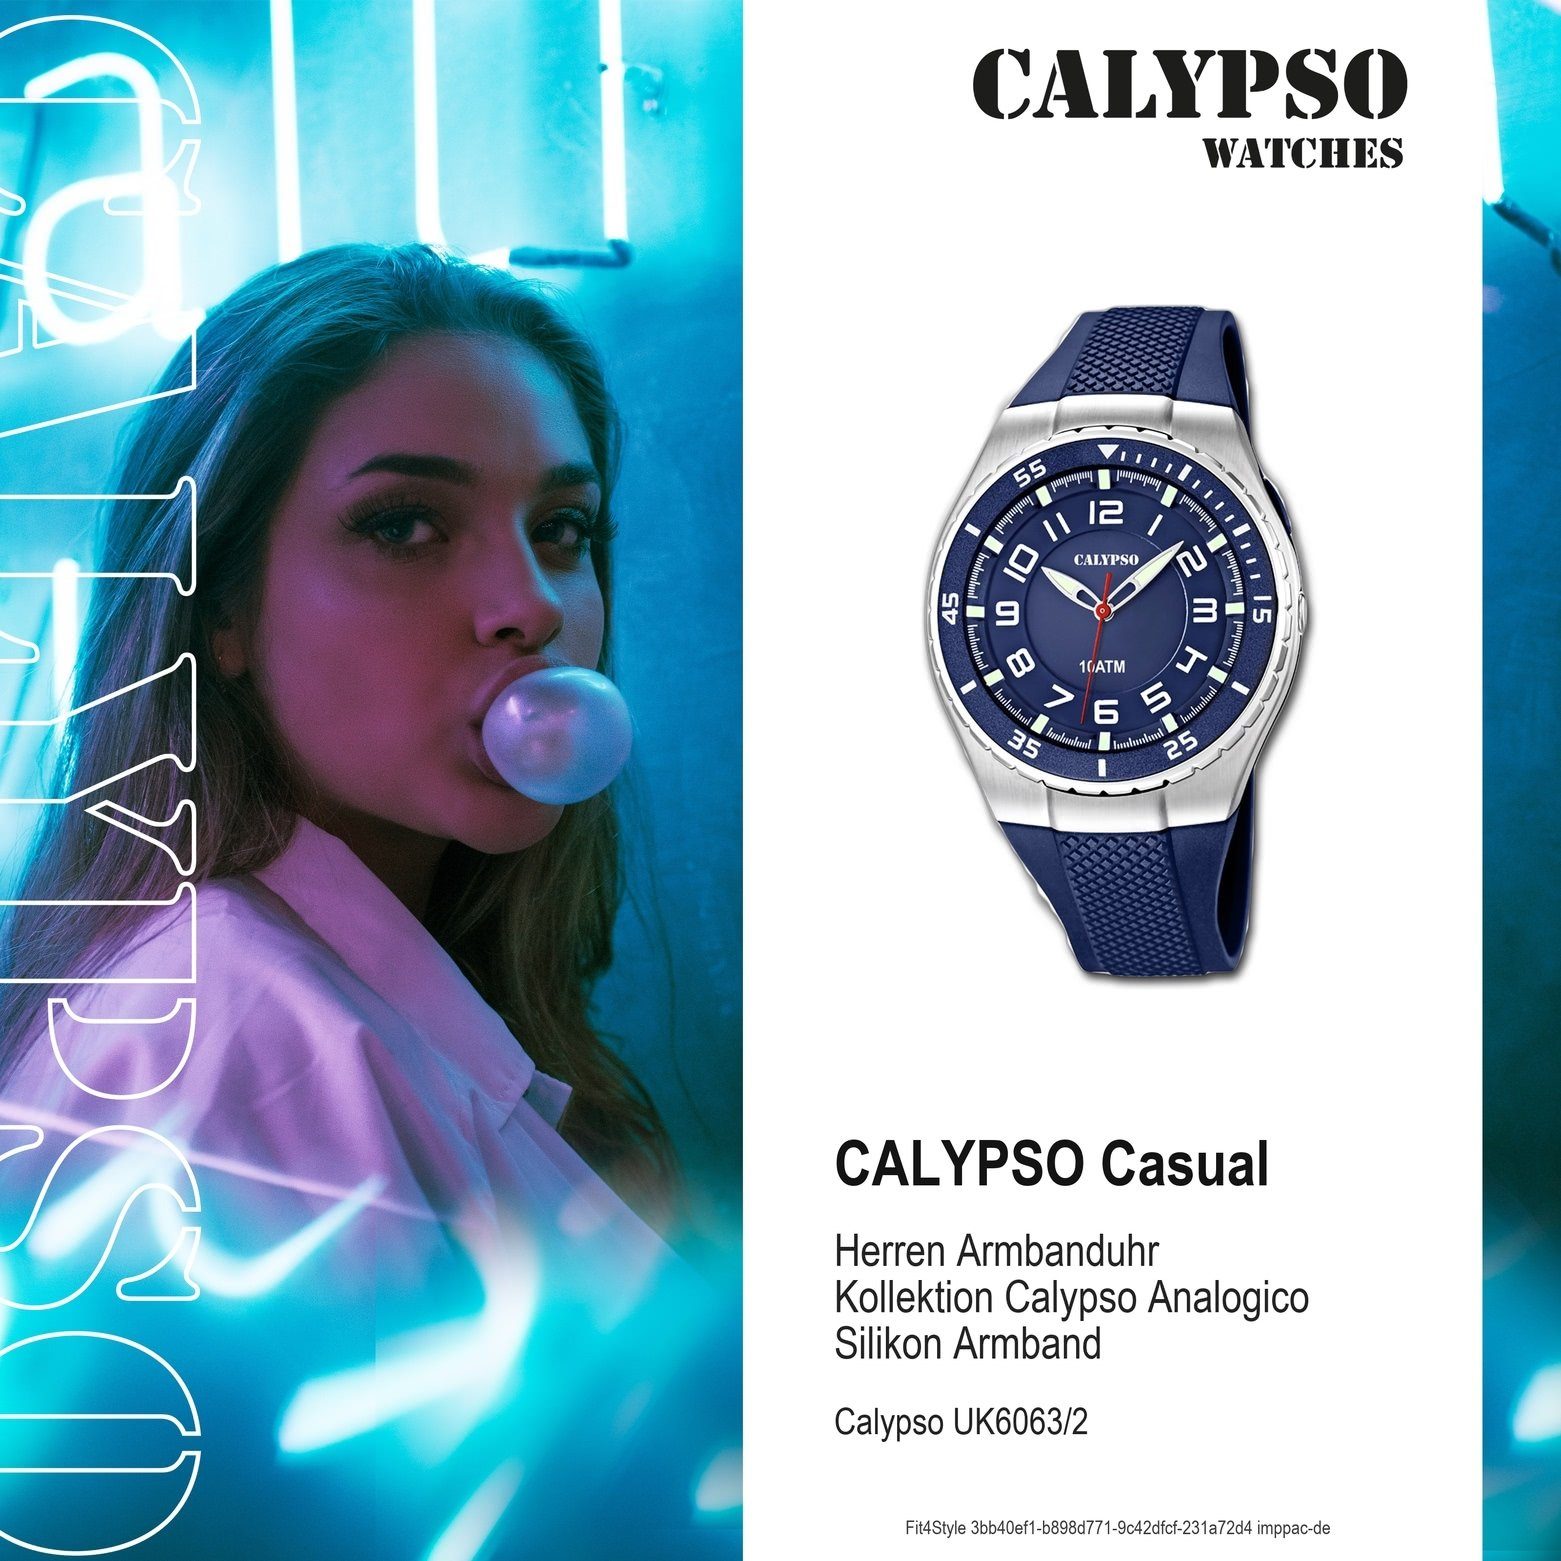 CALYPSO WATCHES Silikonarmband K6063/2 Quarzuhr Calypso Casual Armbanduhr blau, rund, Silikon, Herren Herren Casual Uhr